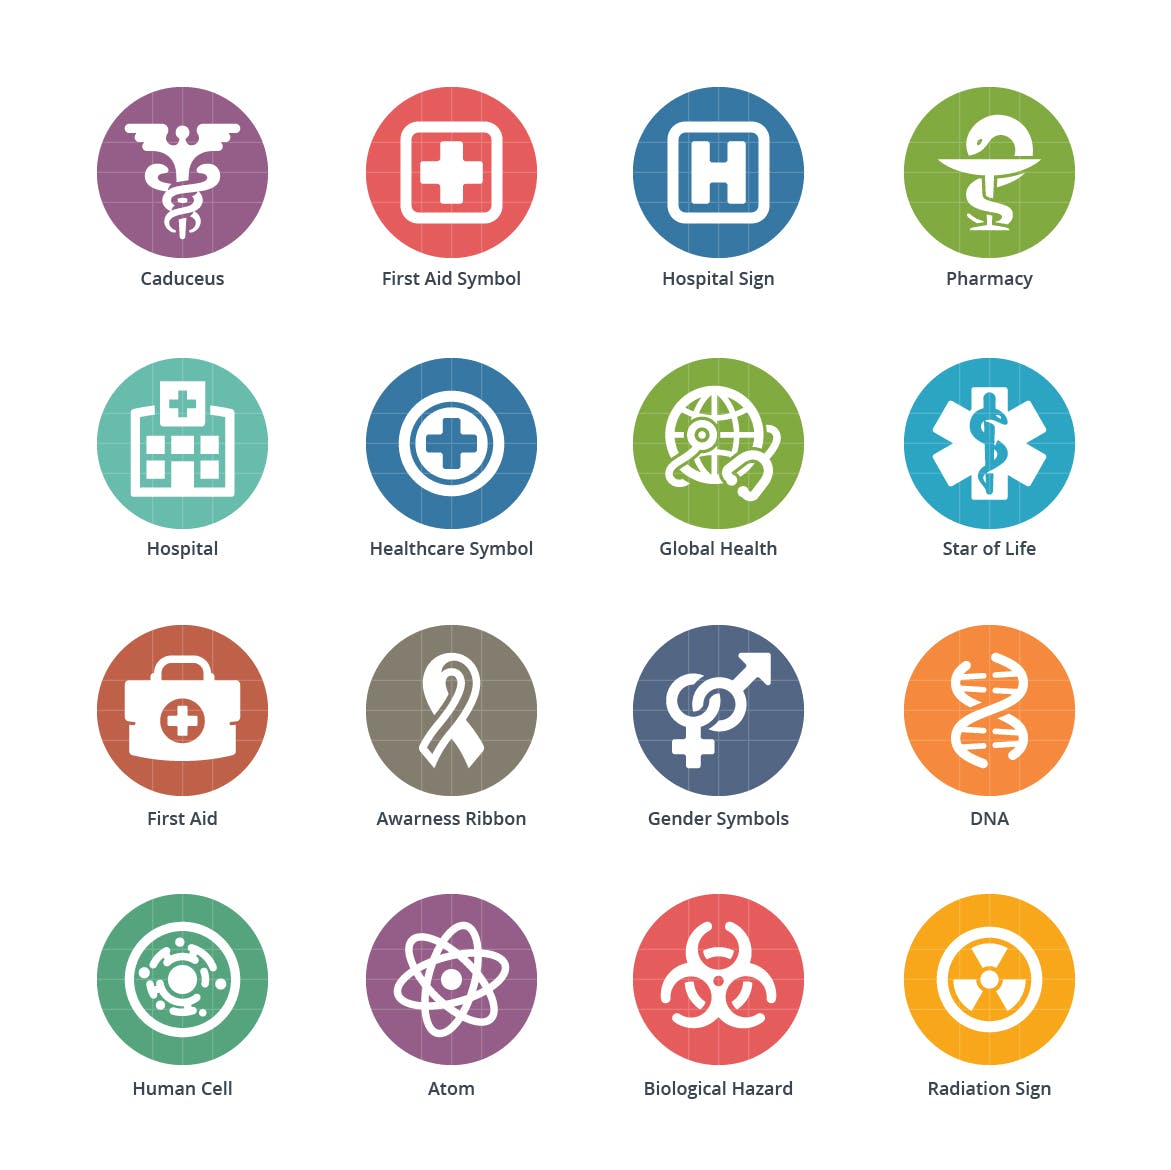 Colored系列-医疗保健主题矢量第一素材精选图标集v1 Medical & Health Care Icons Set 1 – Colored Series插图(2)